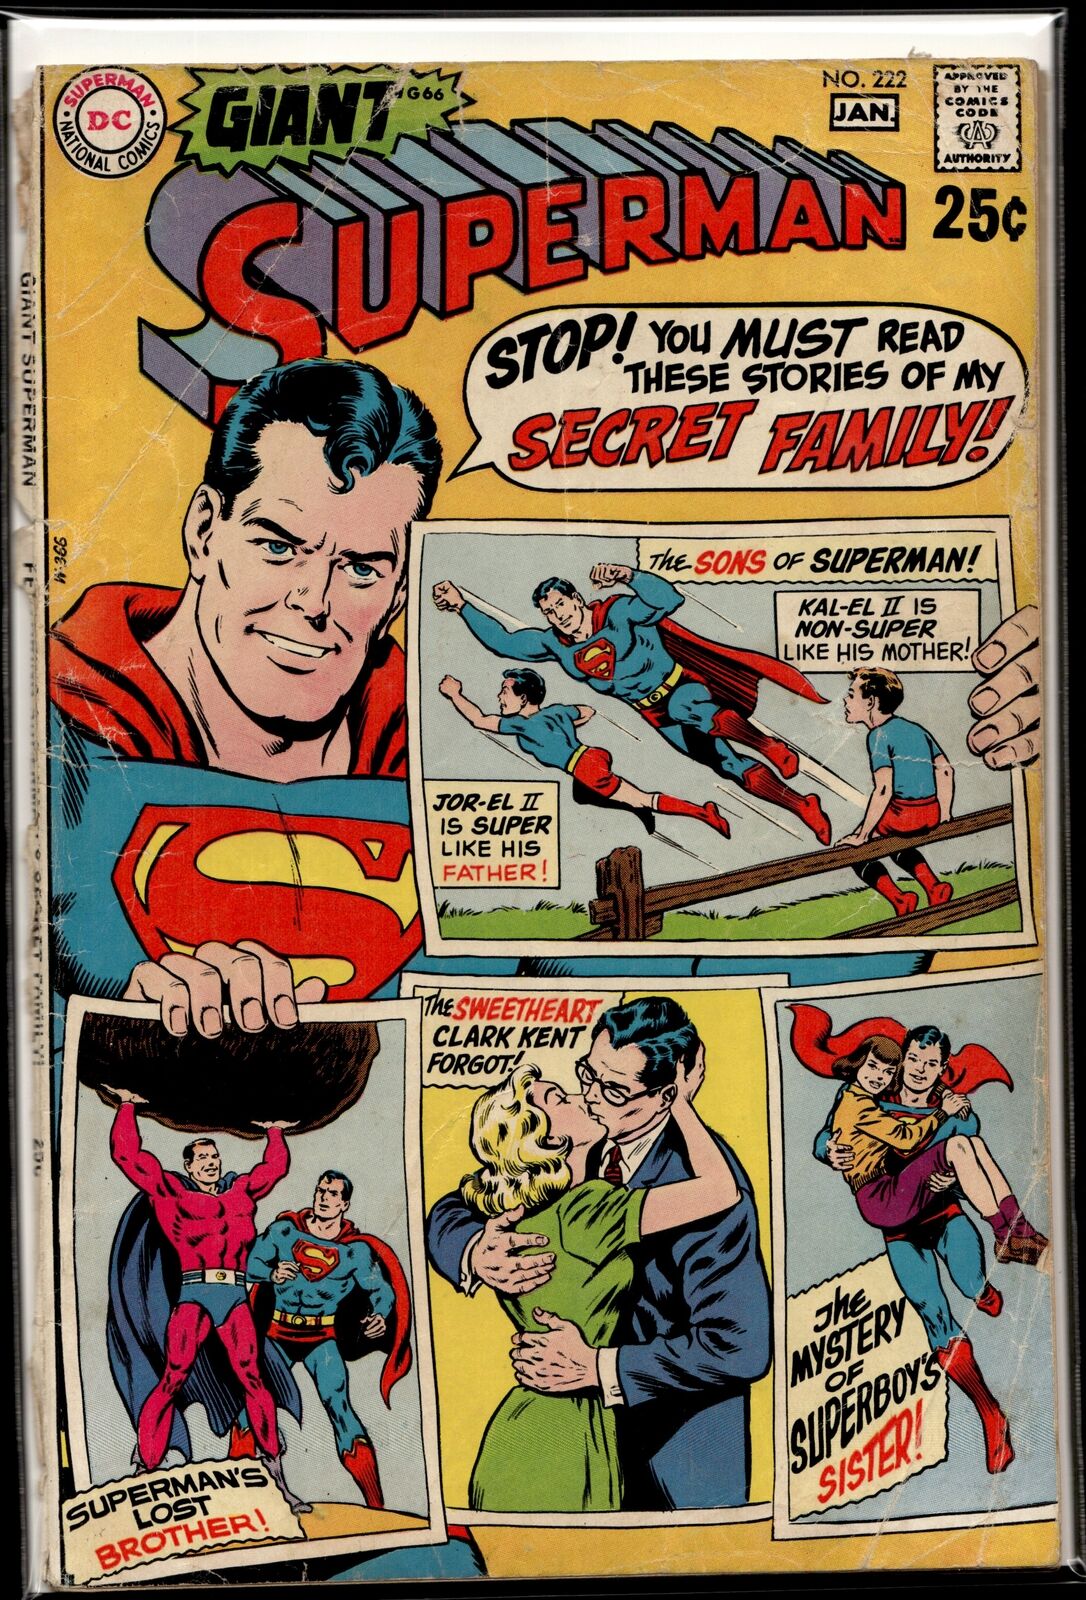 1970 Superman #222 DC Comic